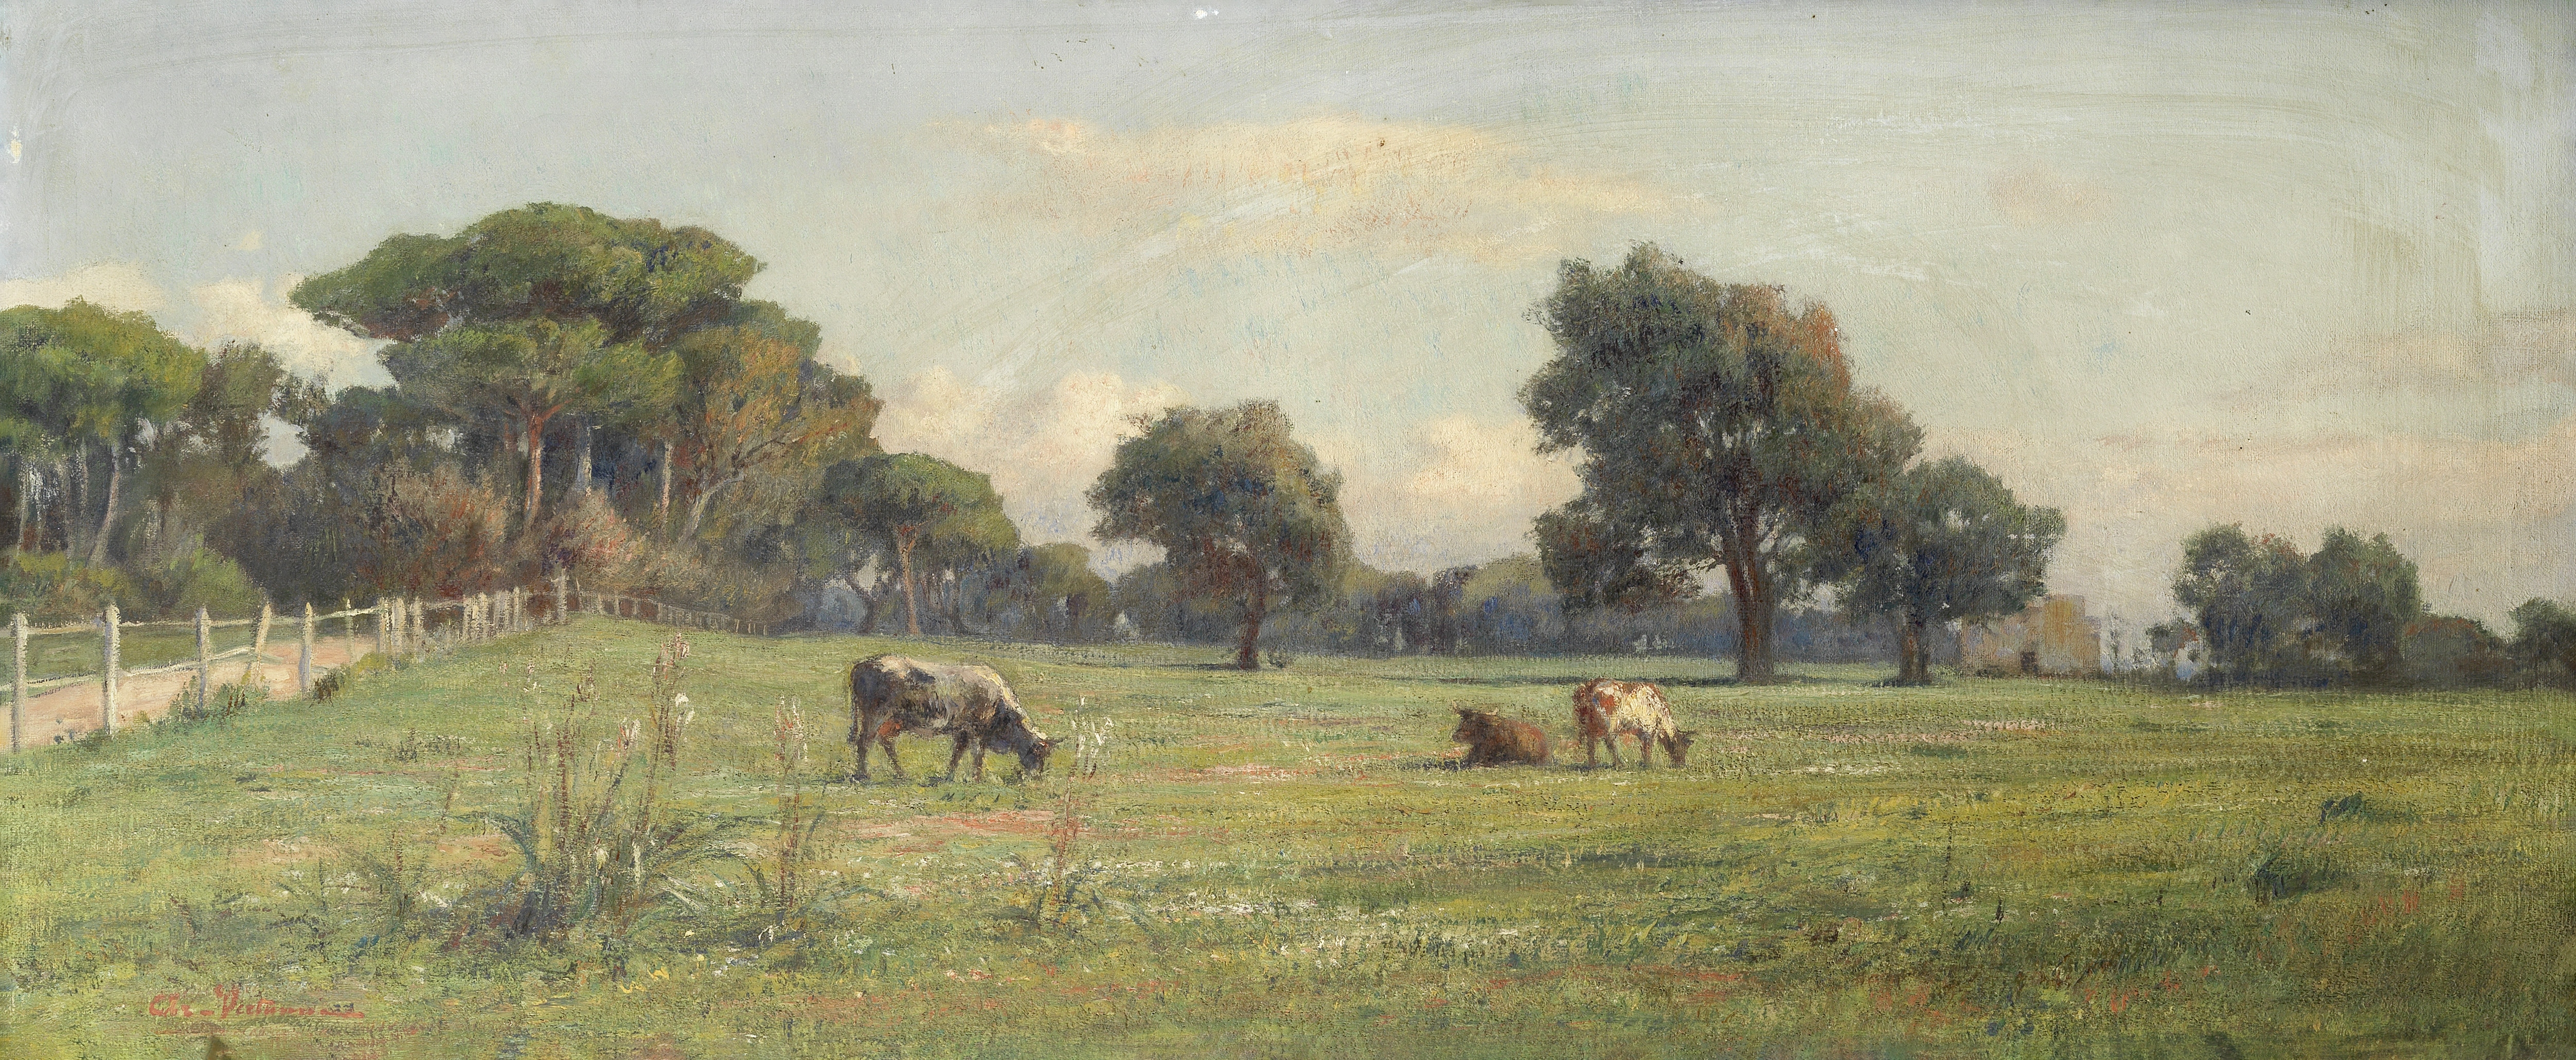 Achille Vertunni (Italian, 1826-1897) Pastoral landscape with cattle grazing